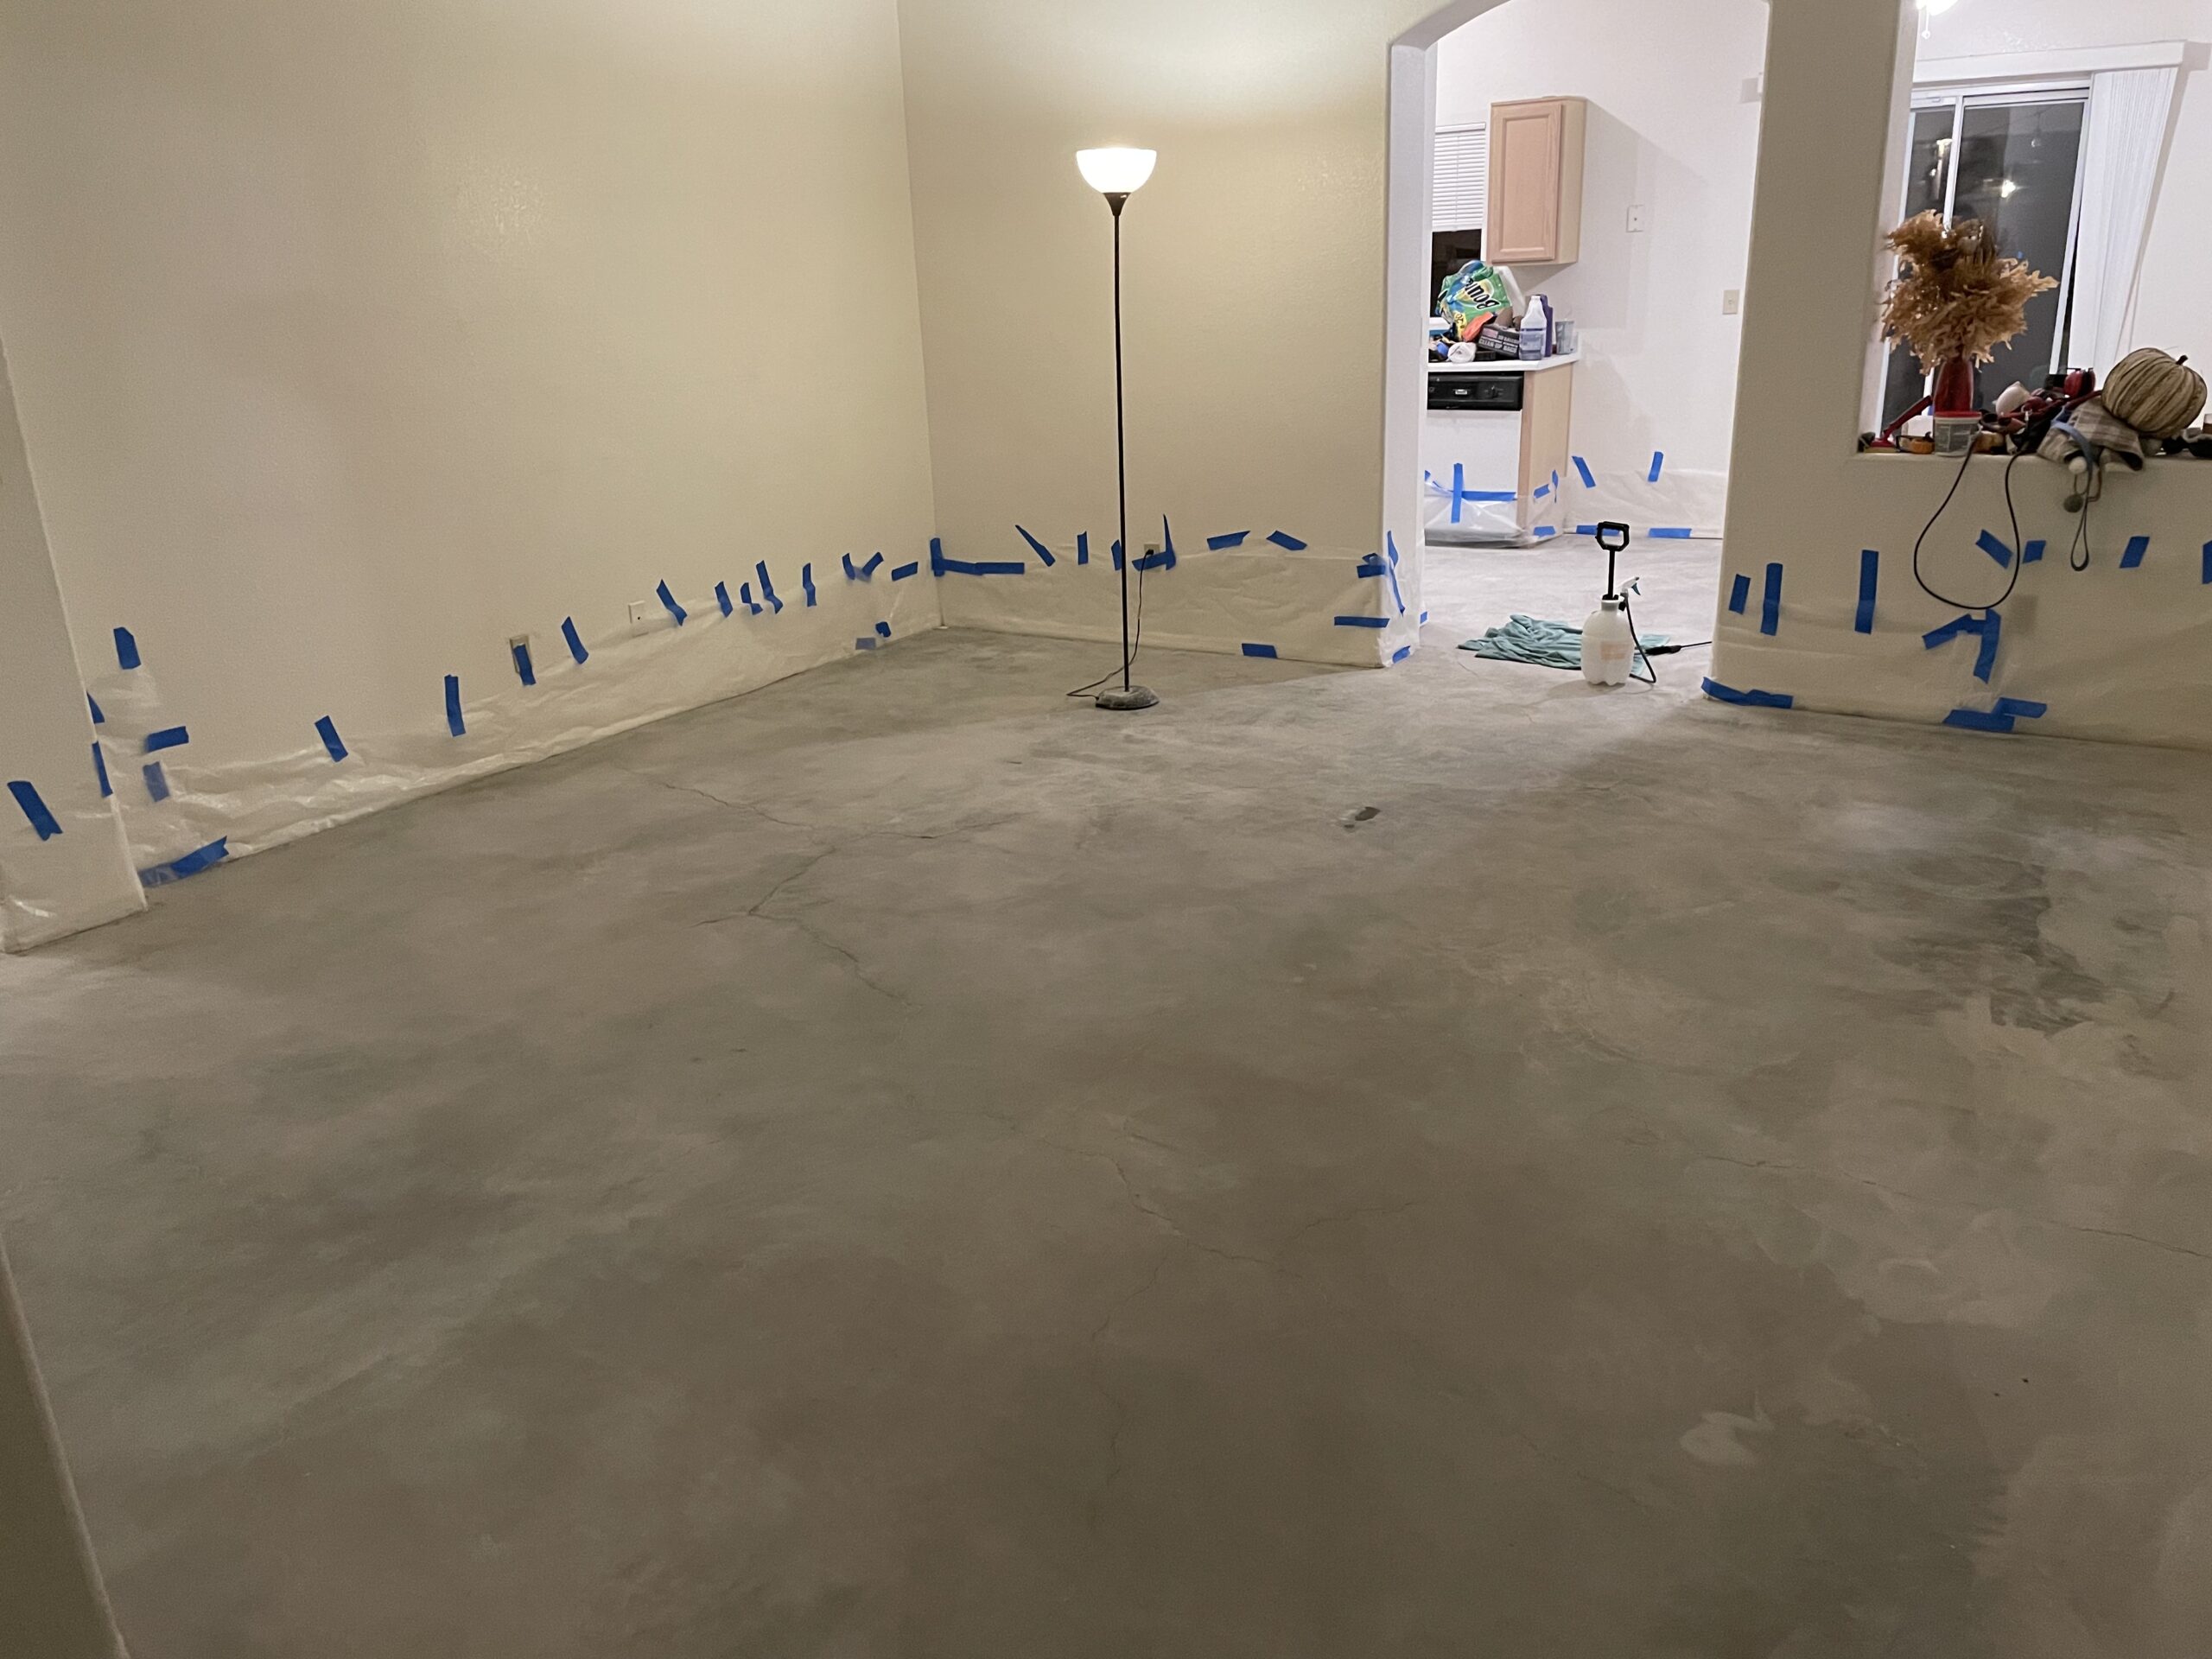 Clean concrete floor